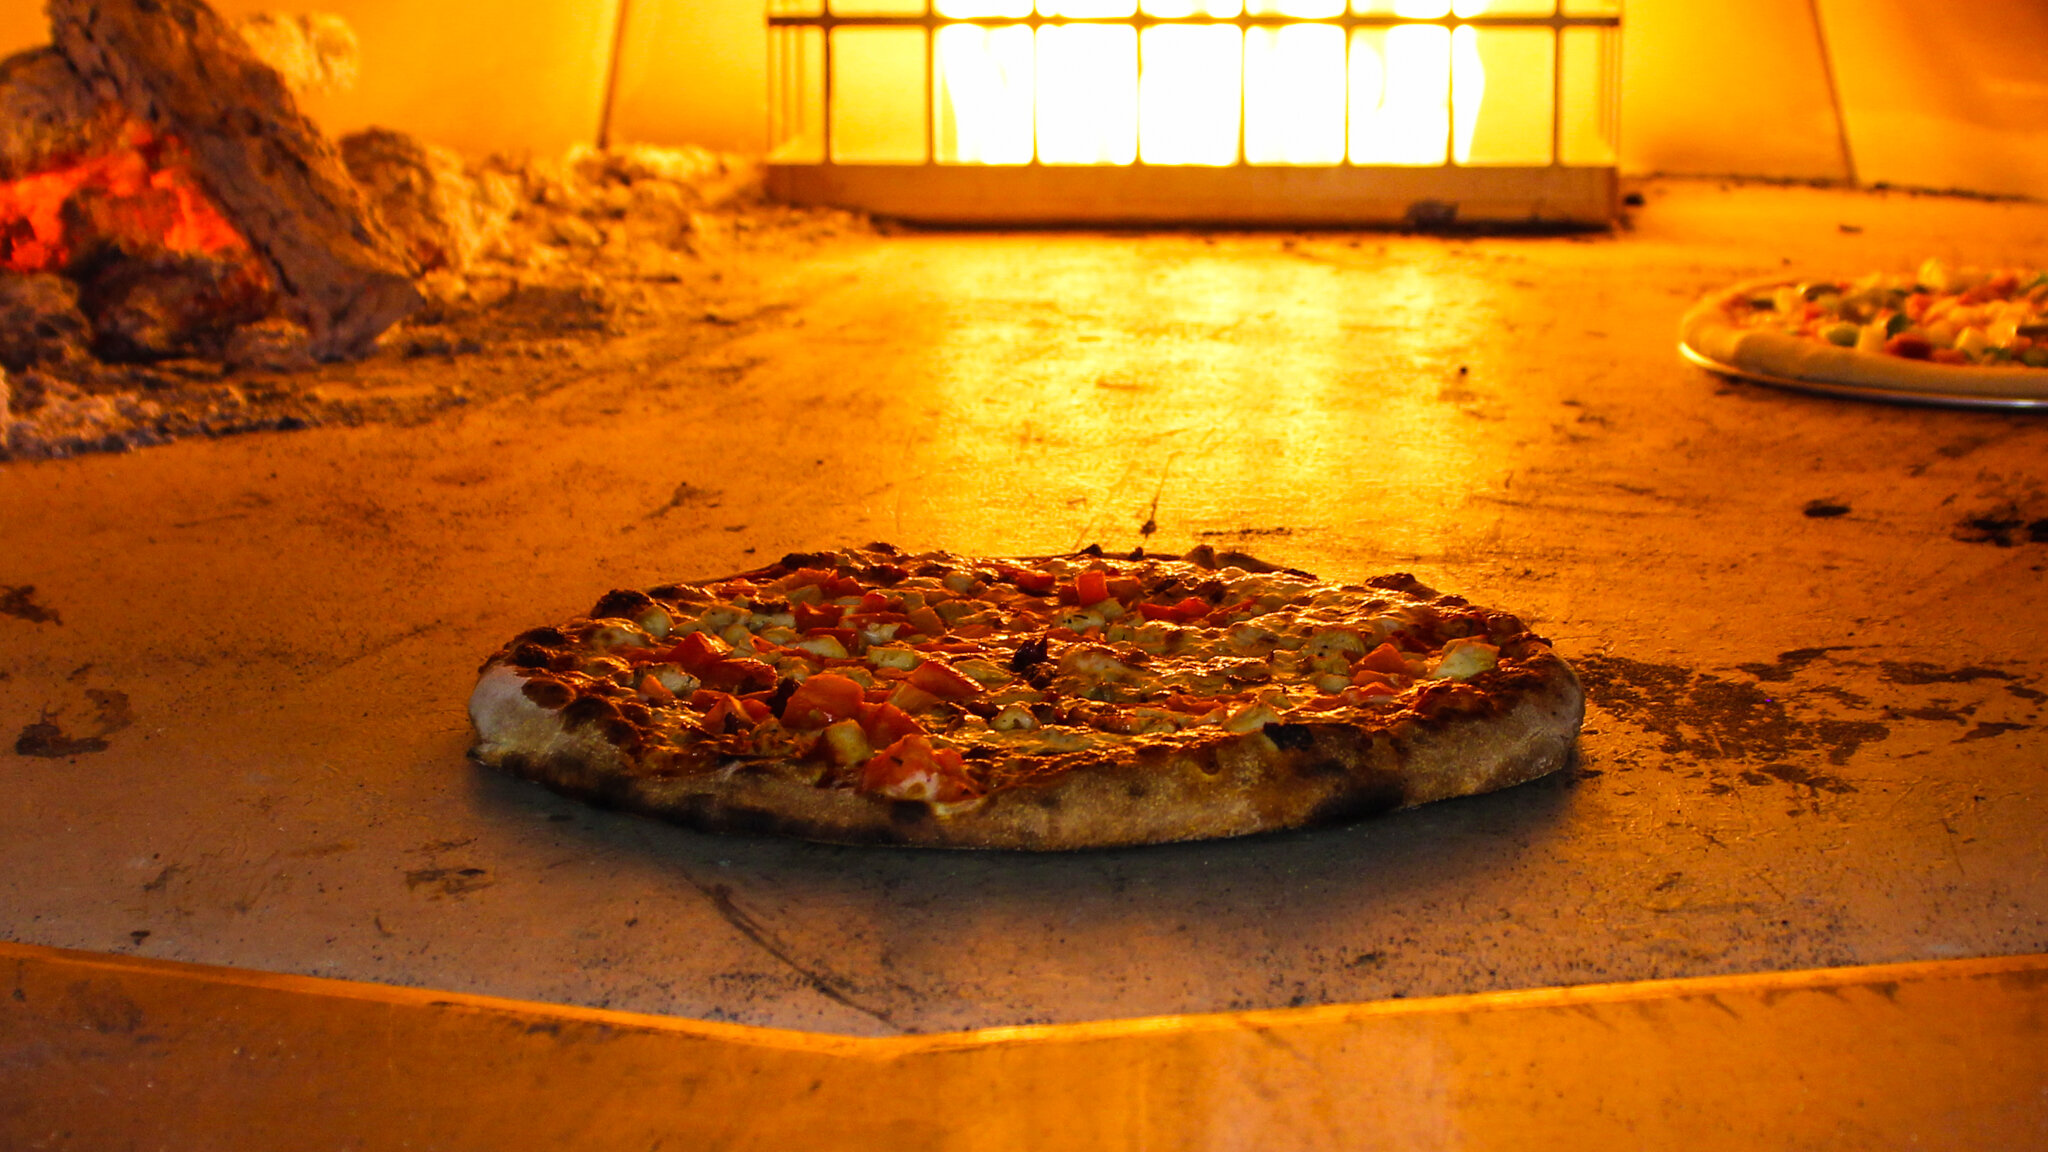 Fiery Gizzard Pizzeria — Top of the Rock Restaurant & Brewery